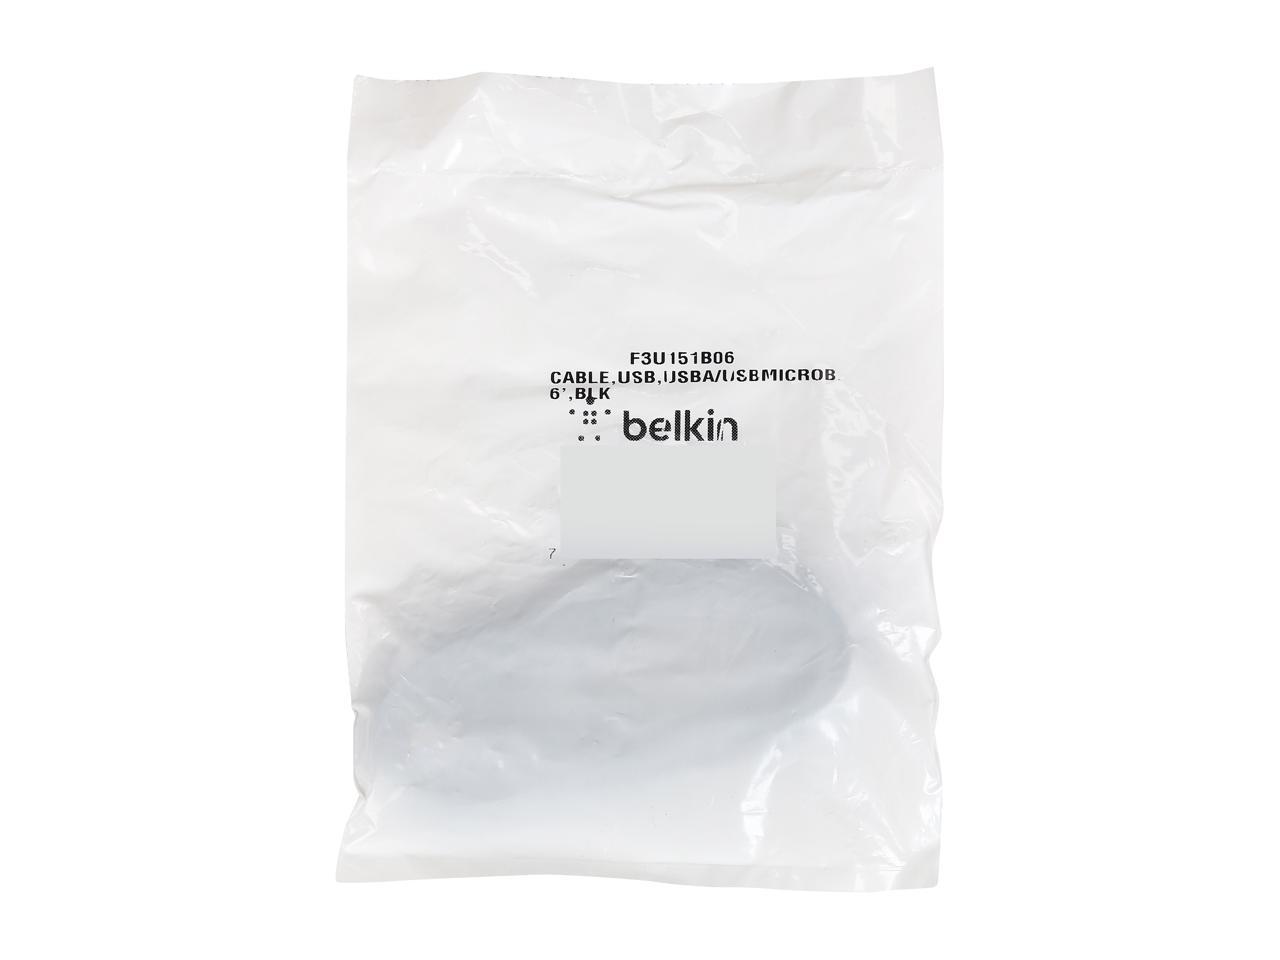 Belkin F3U151B06 Black USB Cable - image 3 of 3